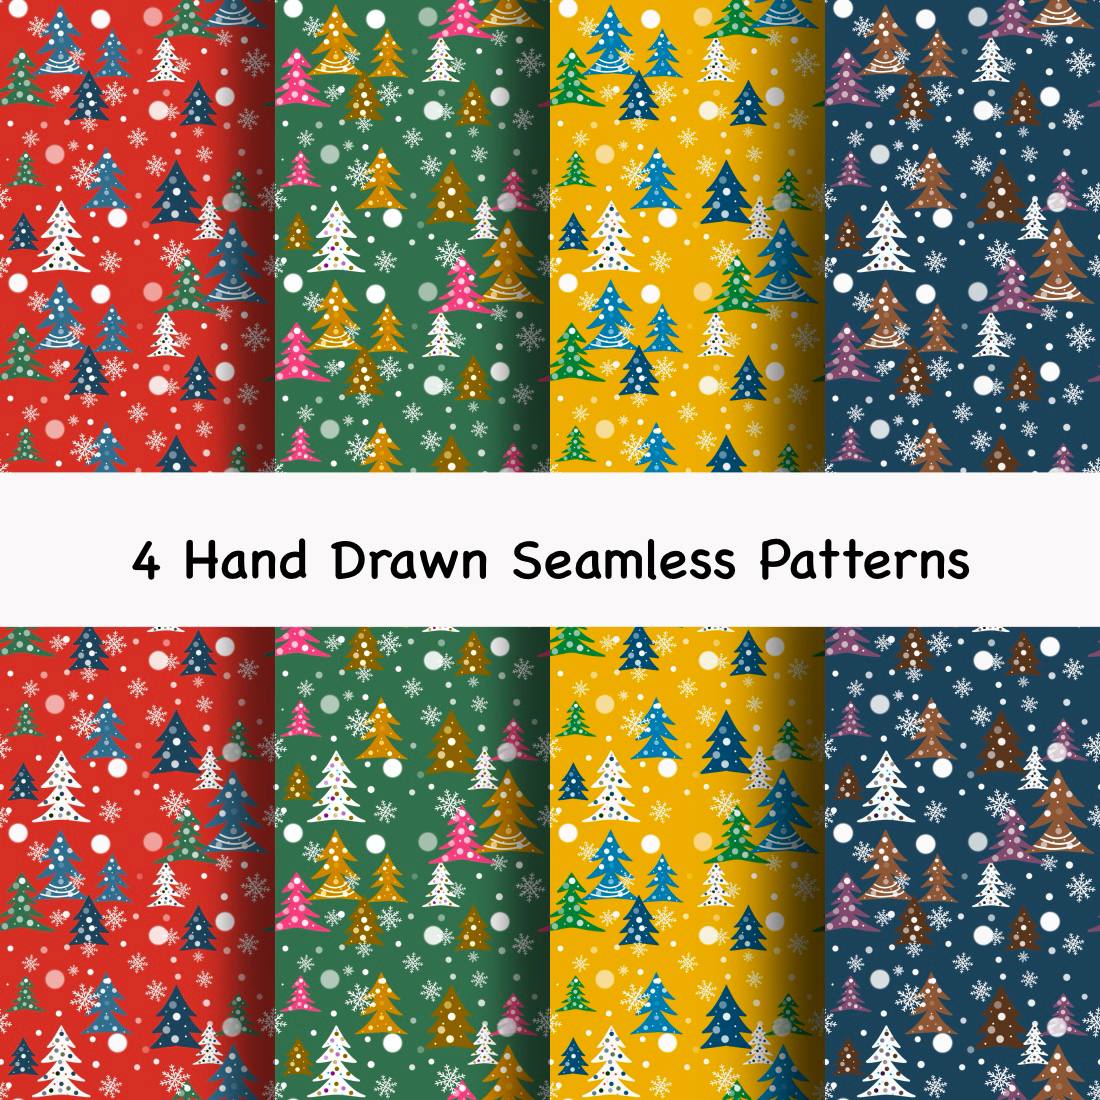 4 Seamless Hand Drawn Patterns Christmas trees herringbone pinterest preview image.